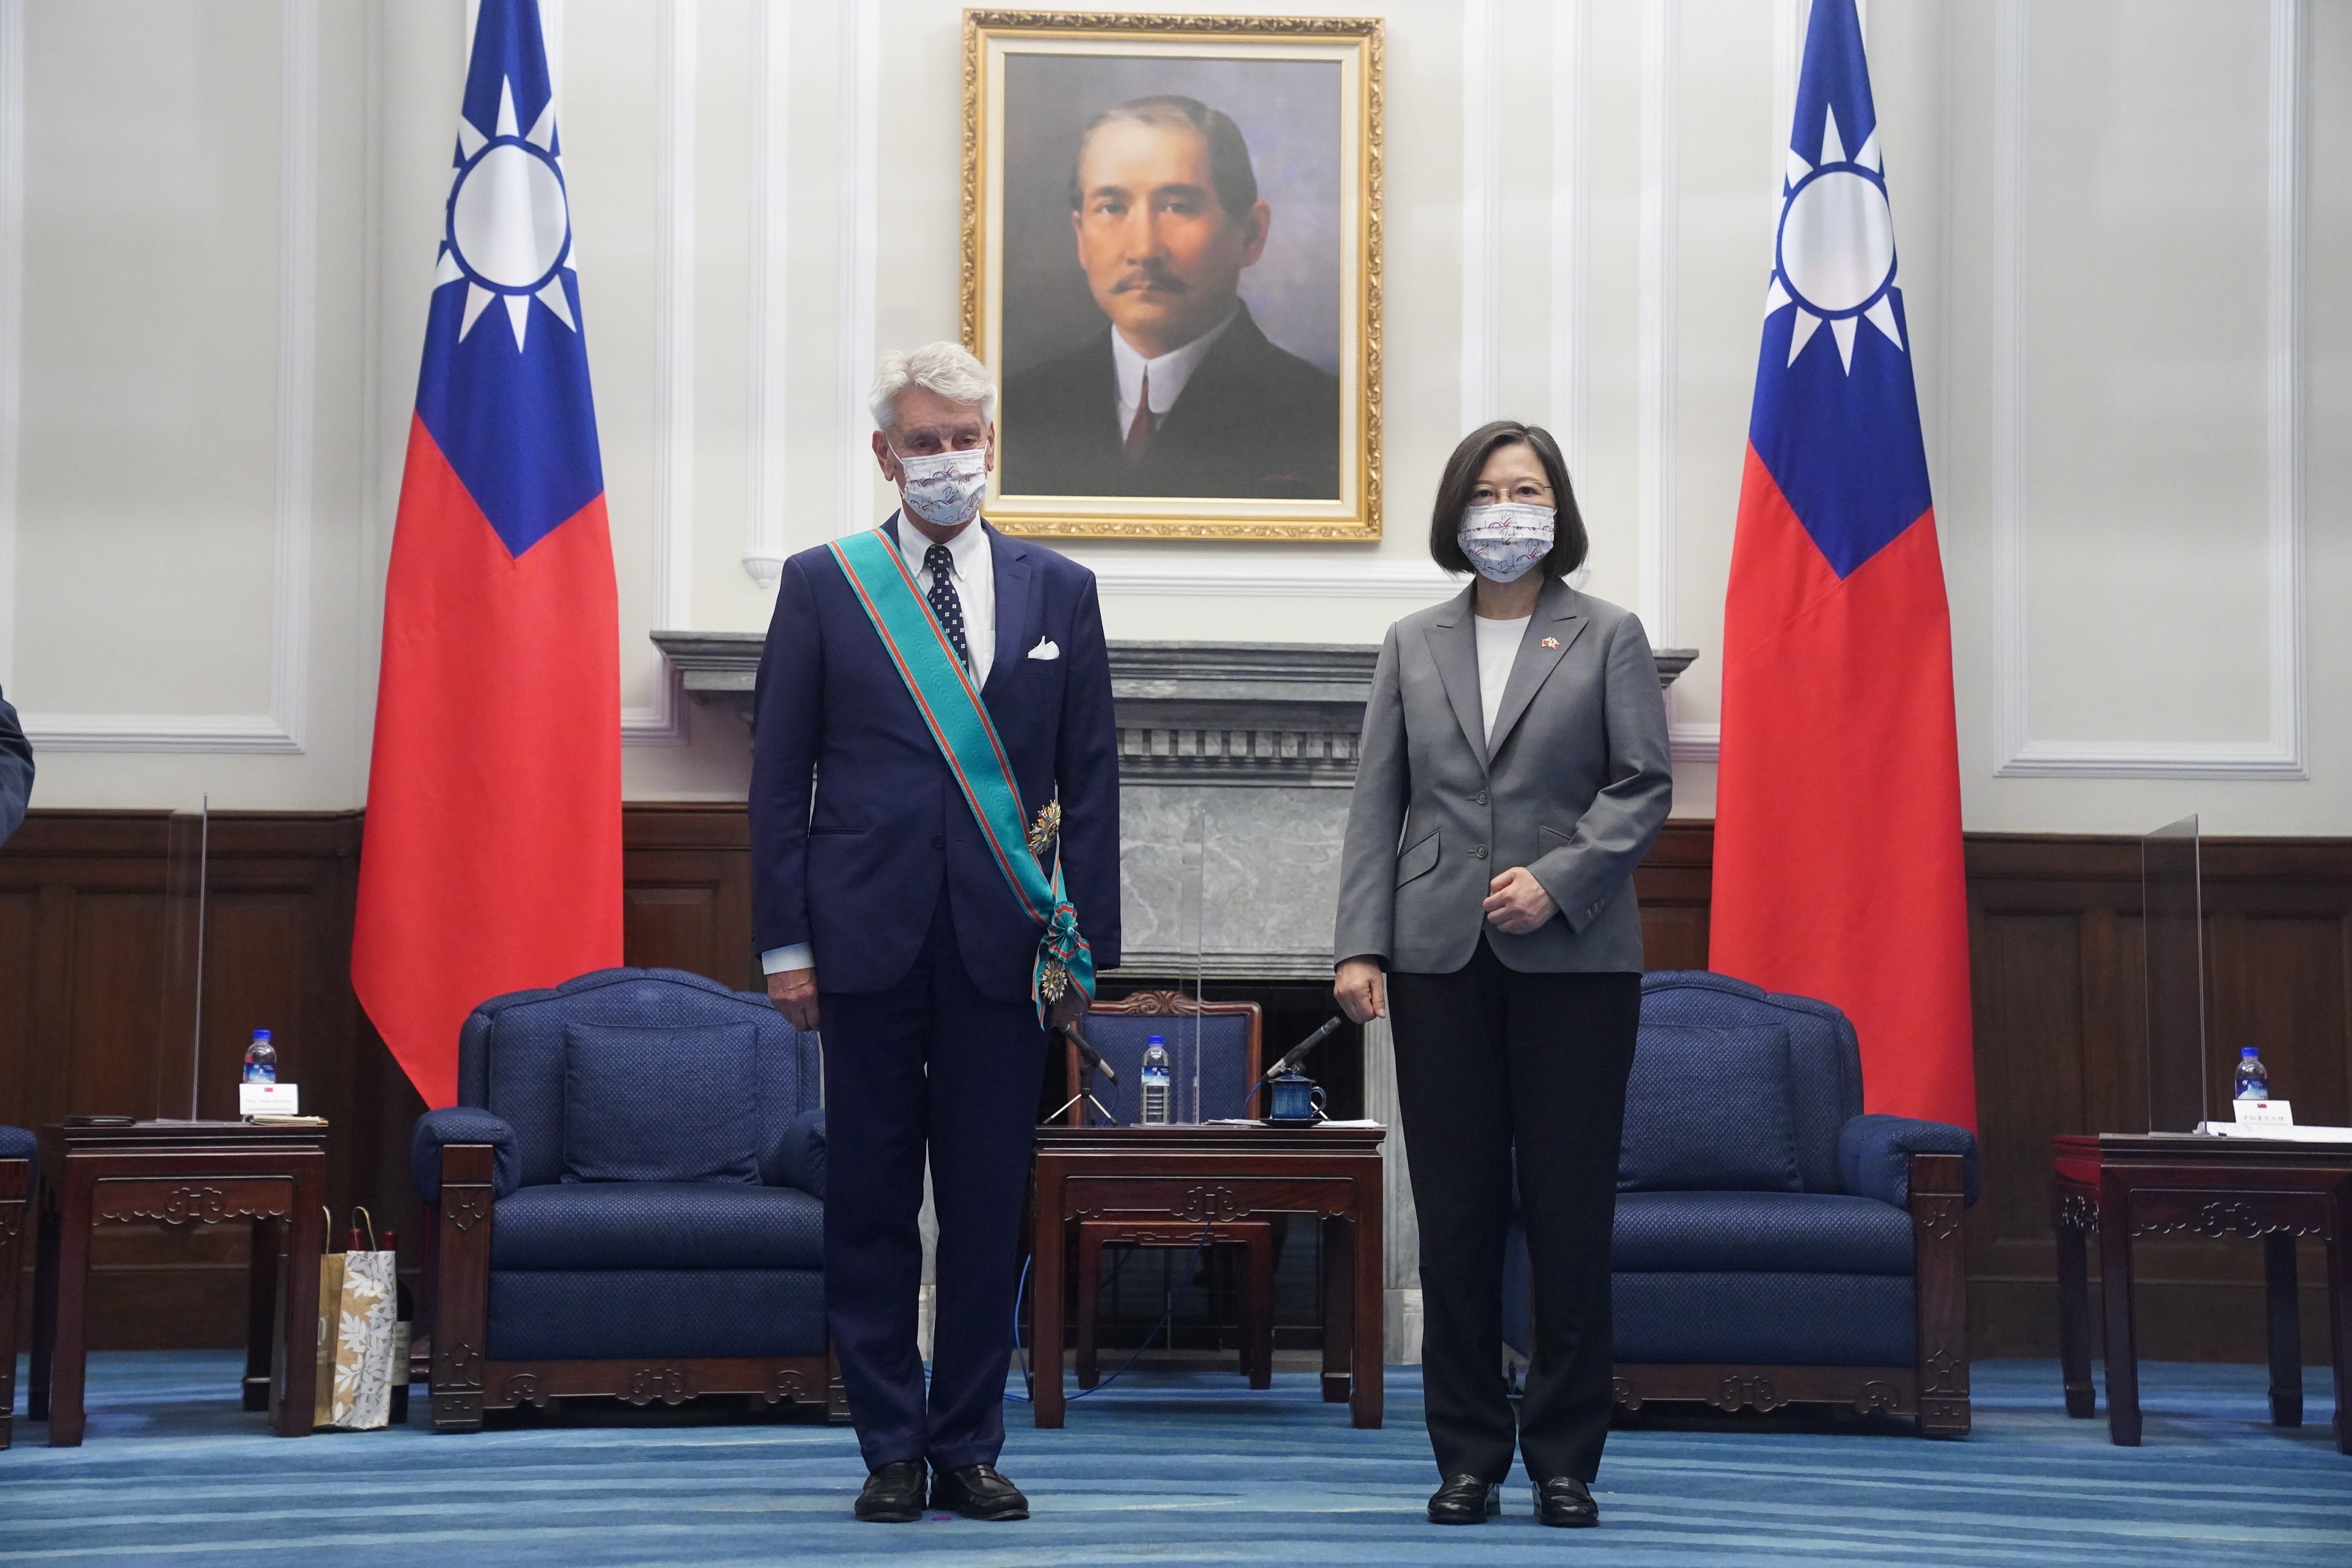 Taiwan's President Tsai Ing-wen stands next to French Senator Alain Richard during their meeting in Taipei